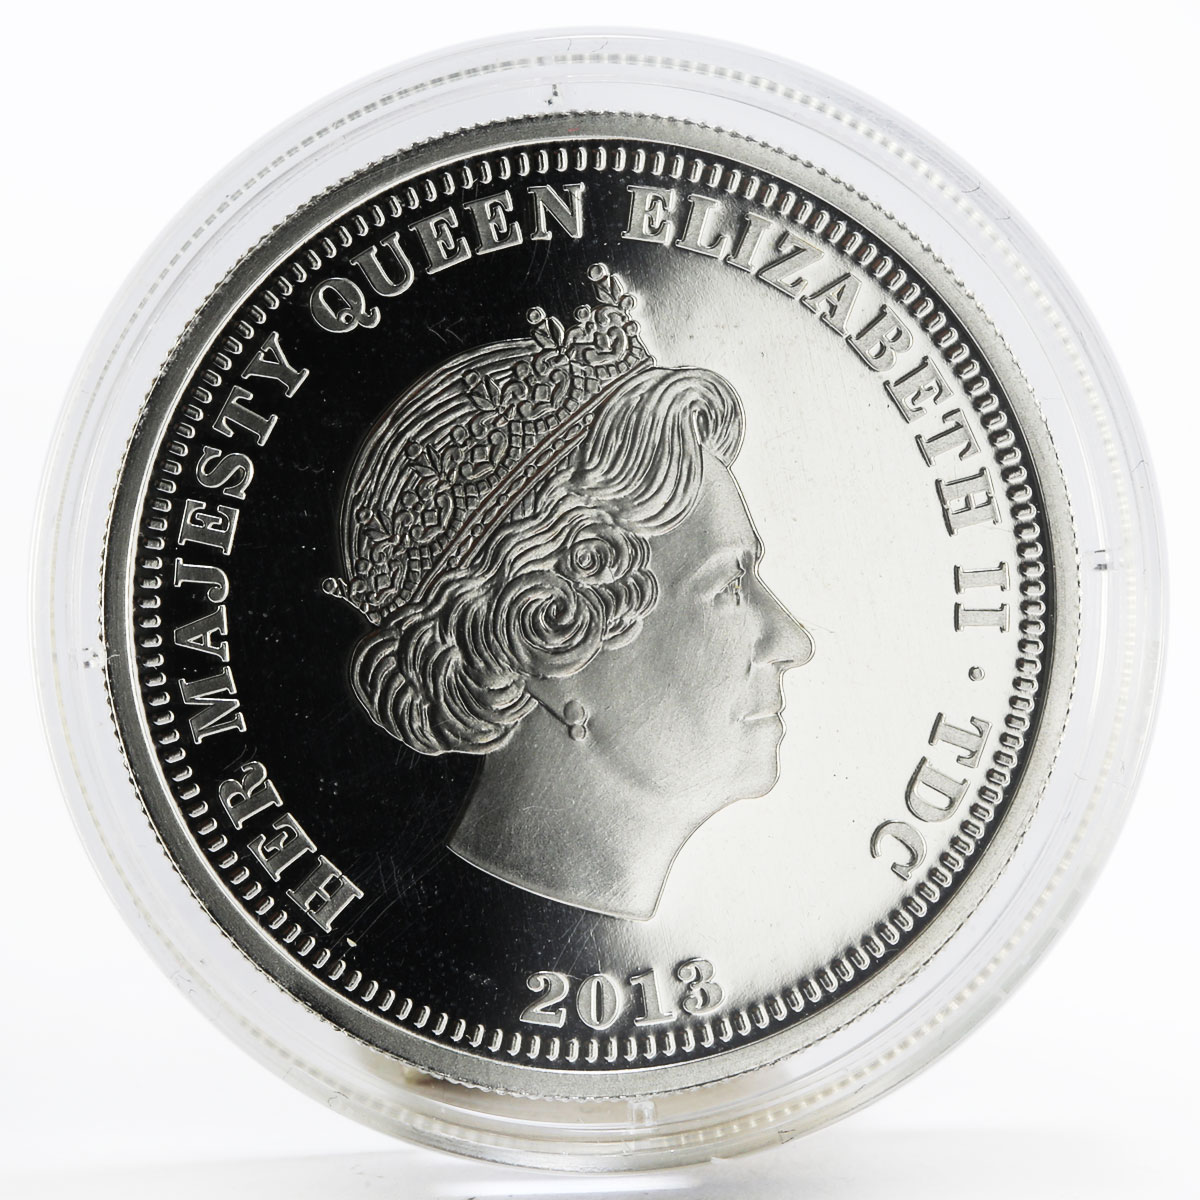 Tristan da Cunha 1 guinea The History of the Guinea George II silver coin 2013